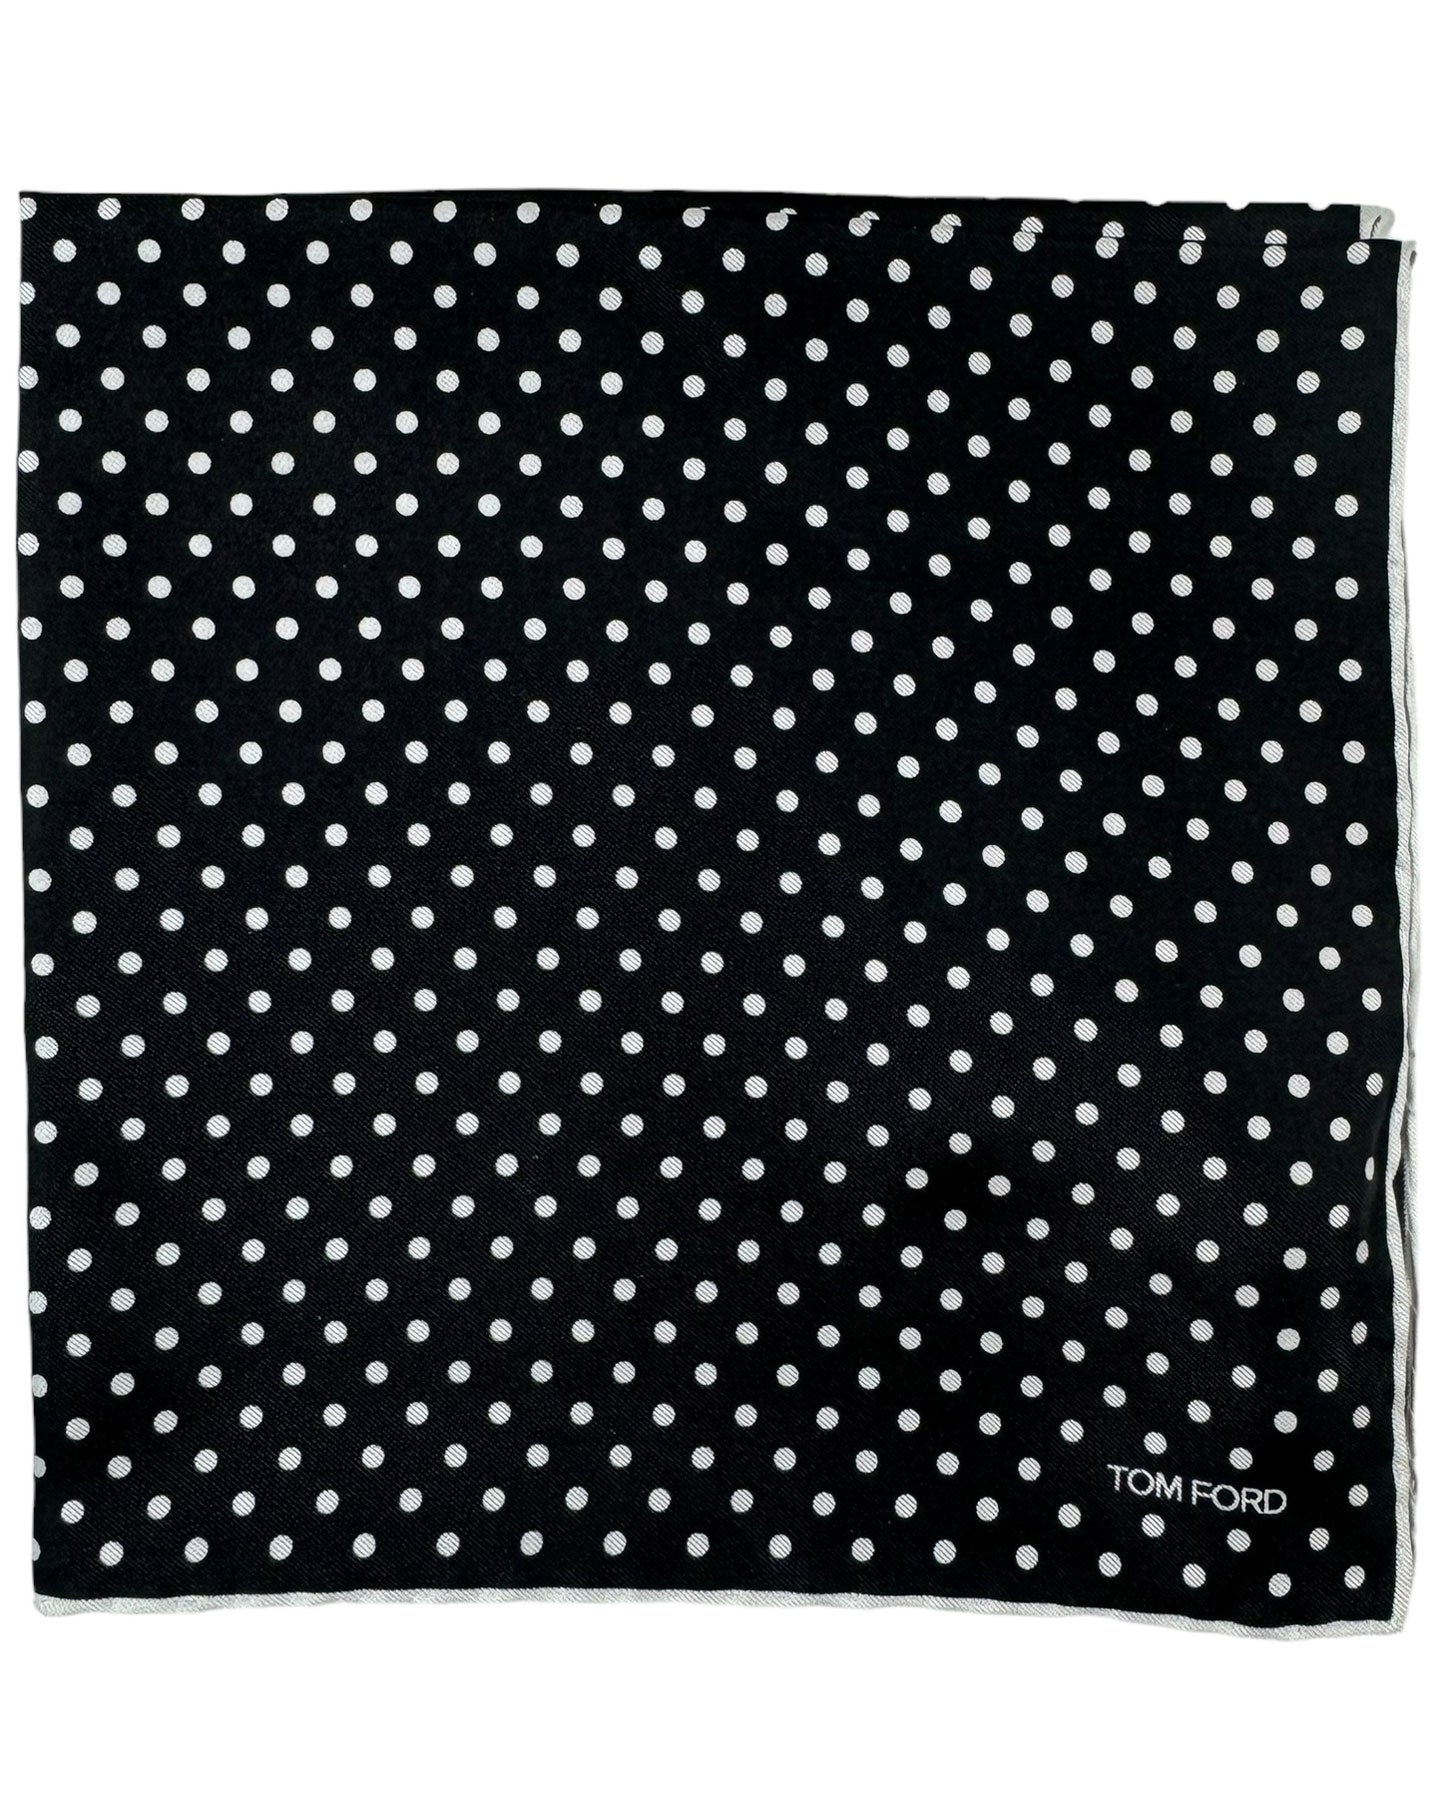 Tom Ford Silk Pocket Square Black White Dots